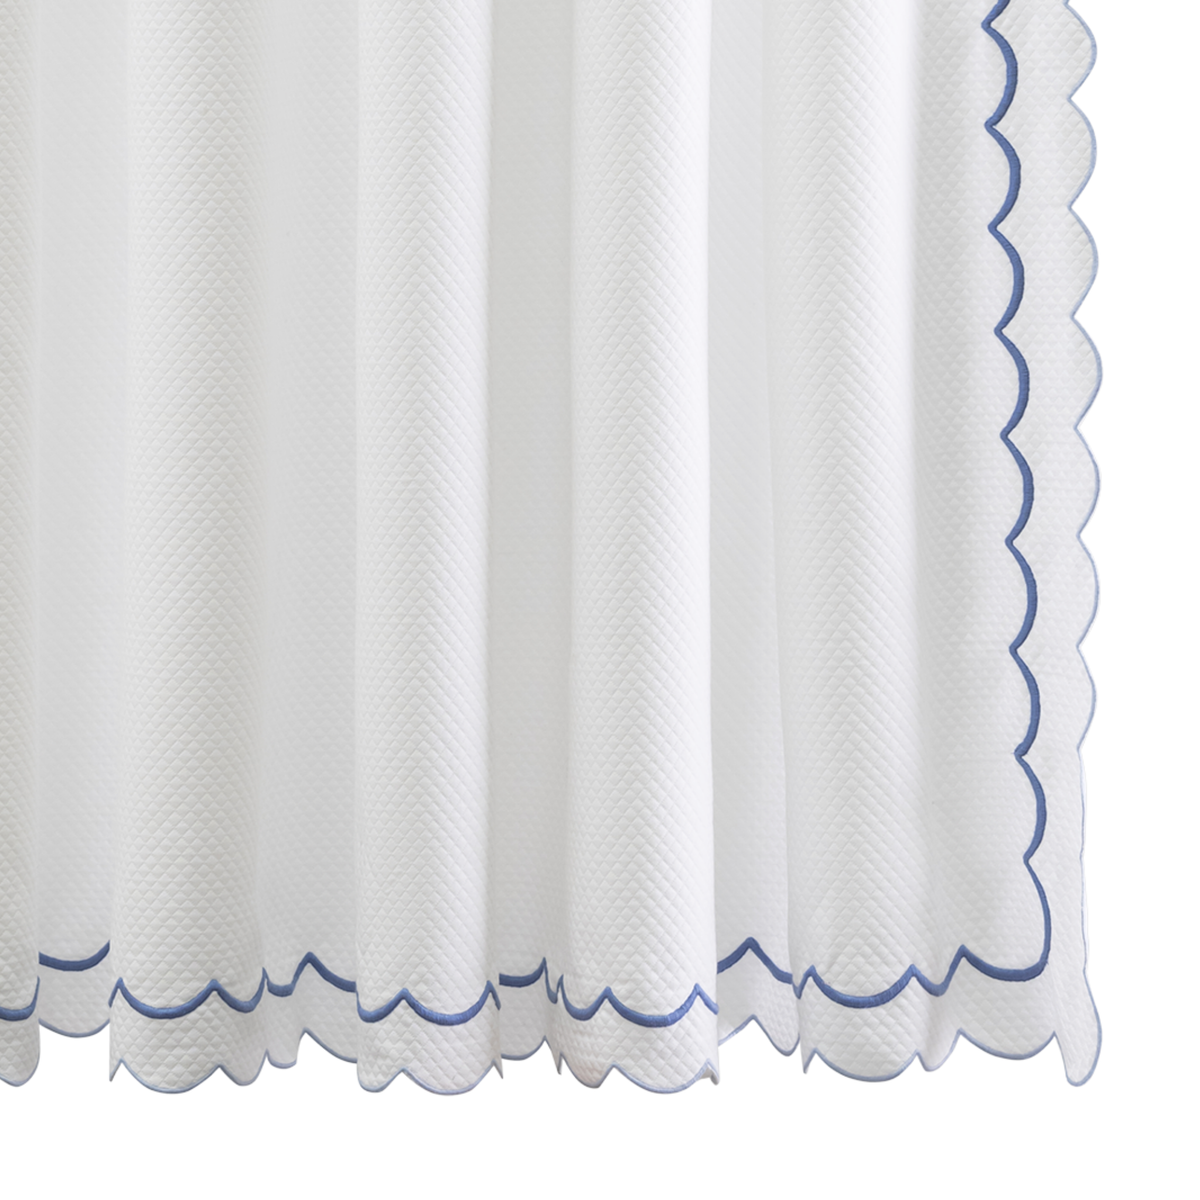 Hanging Edges of Matouk Indie Pique Shower Curtain in Azure Color